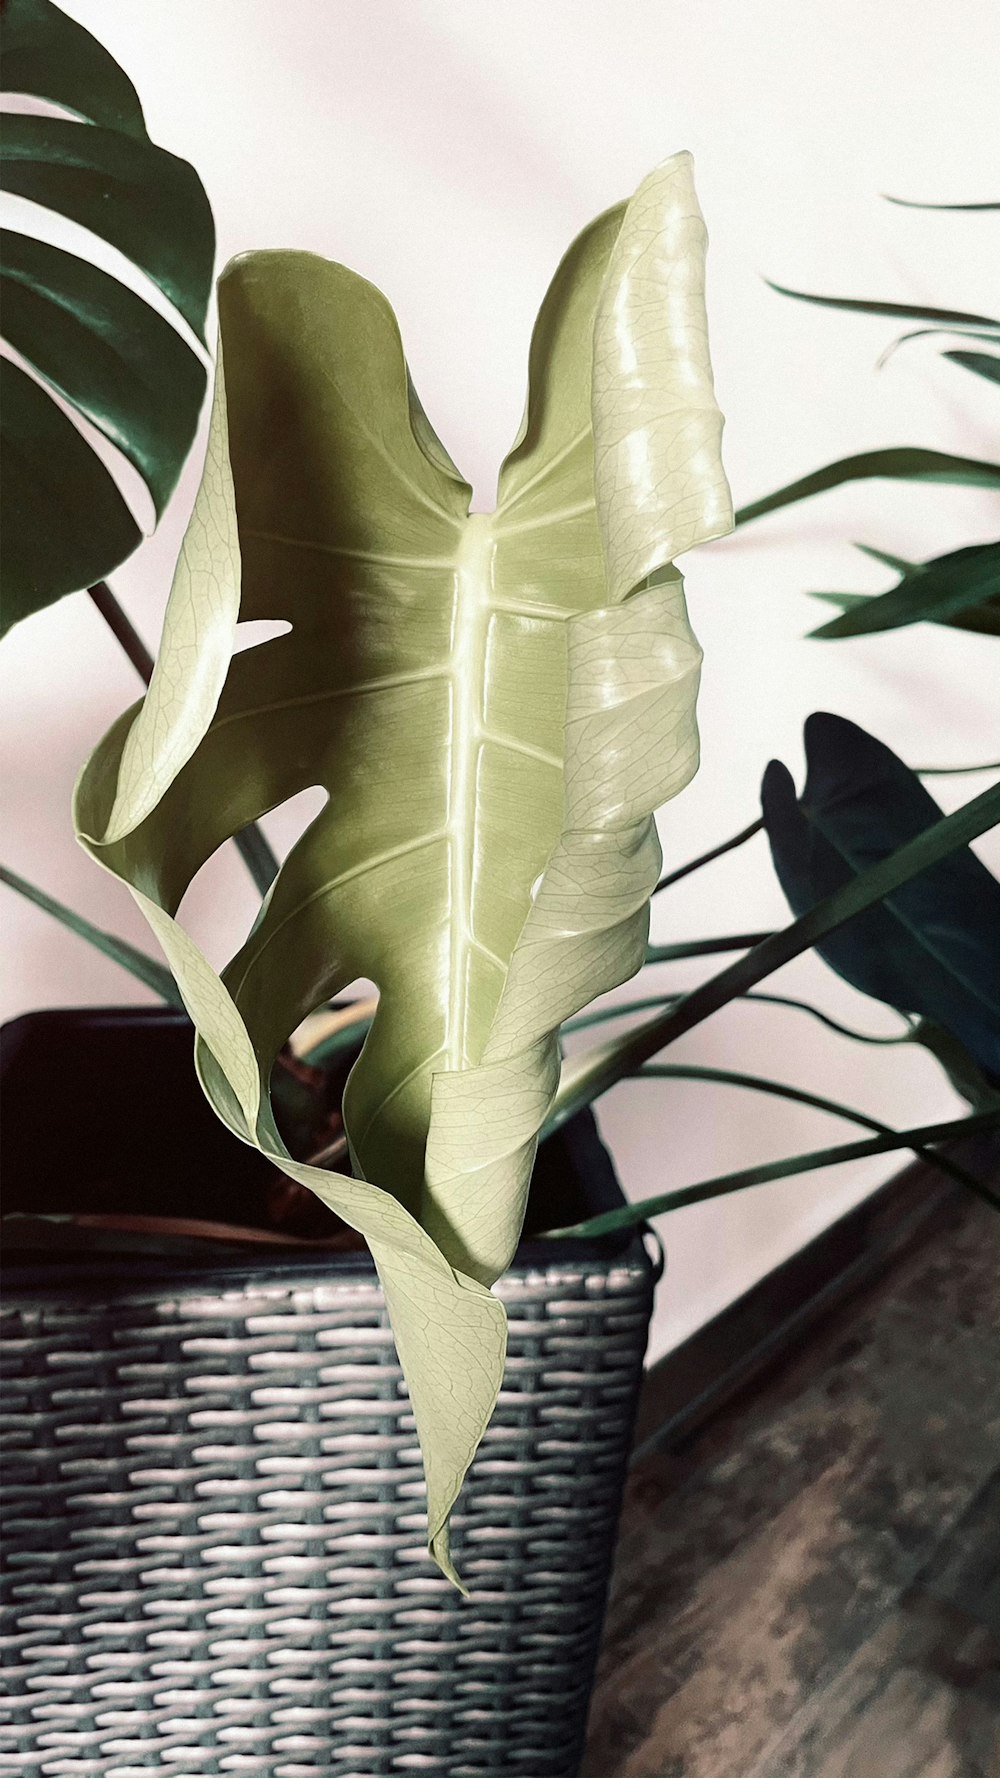 green plant on white woven basket